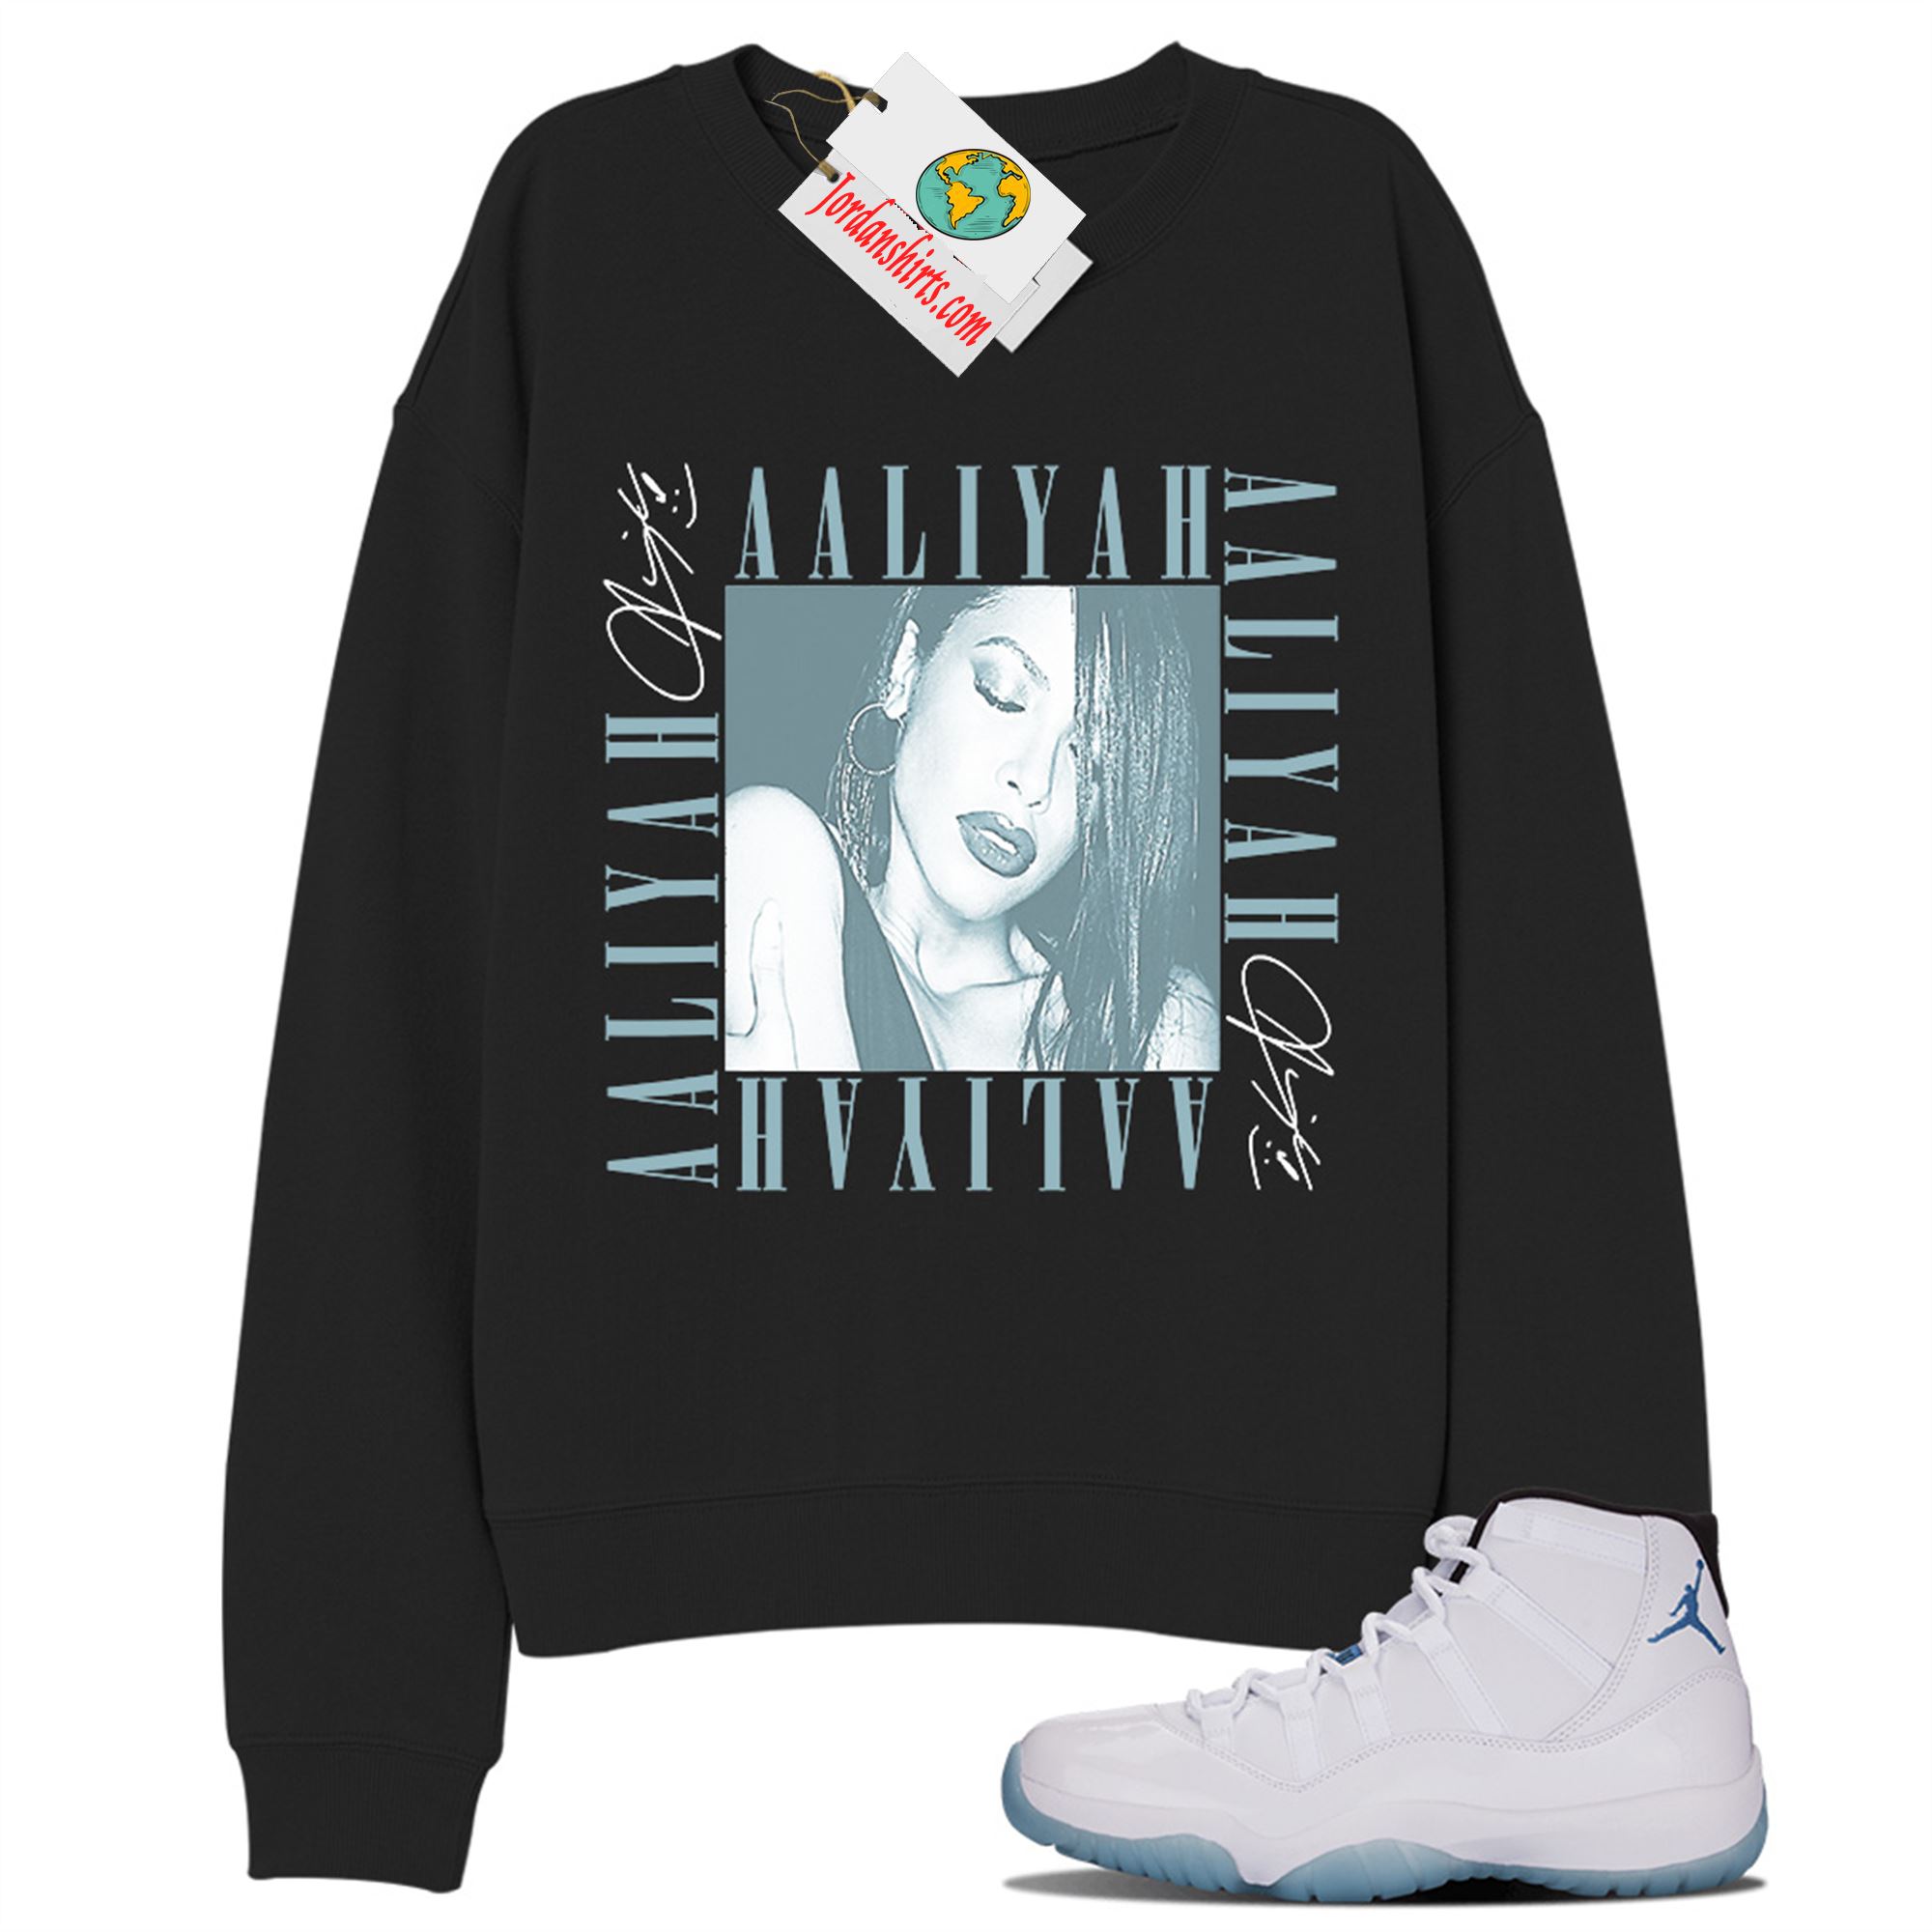 Jordan 11 Sweatshirt, Aaliyah Box Black Sweatshirt Air Jordan 11 Legend Blue 11s Plus Size Up To 5xl